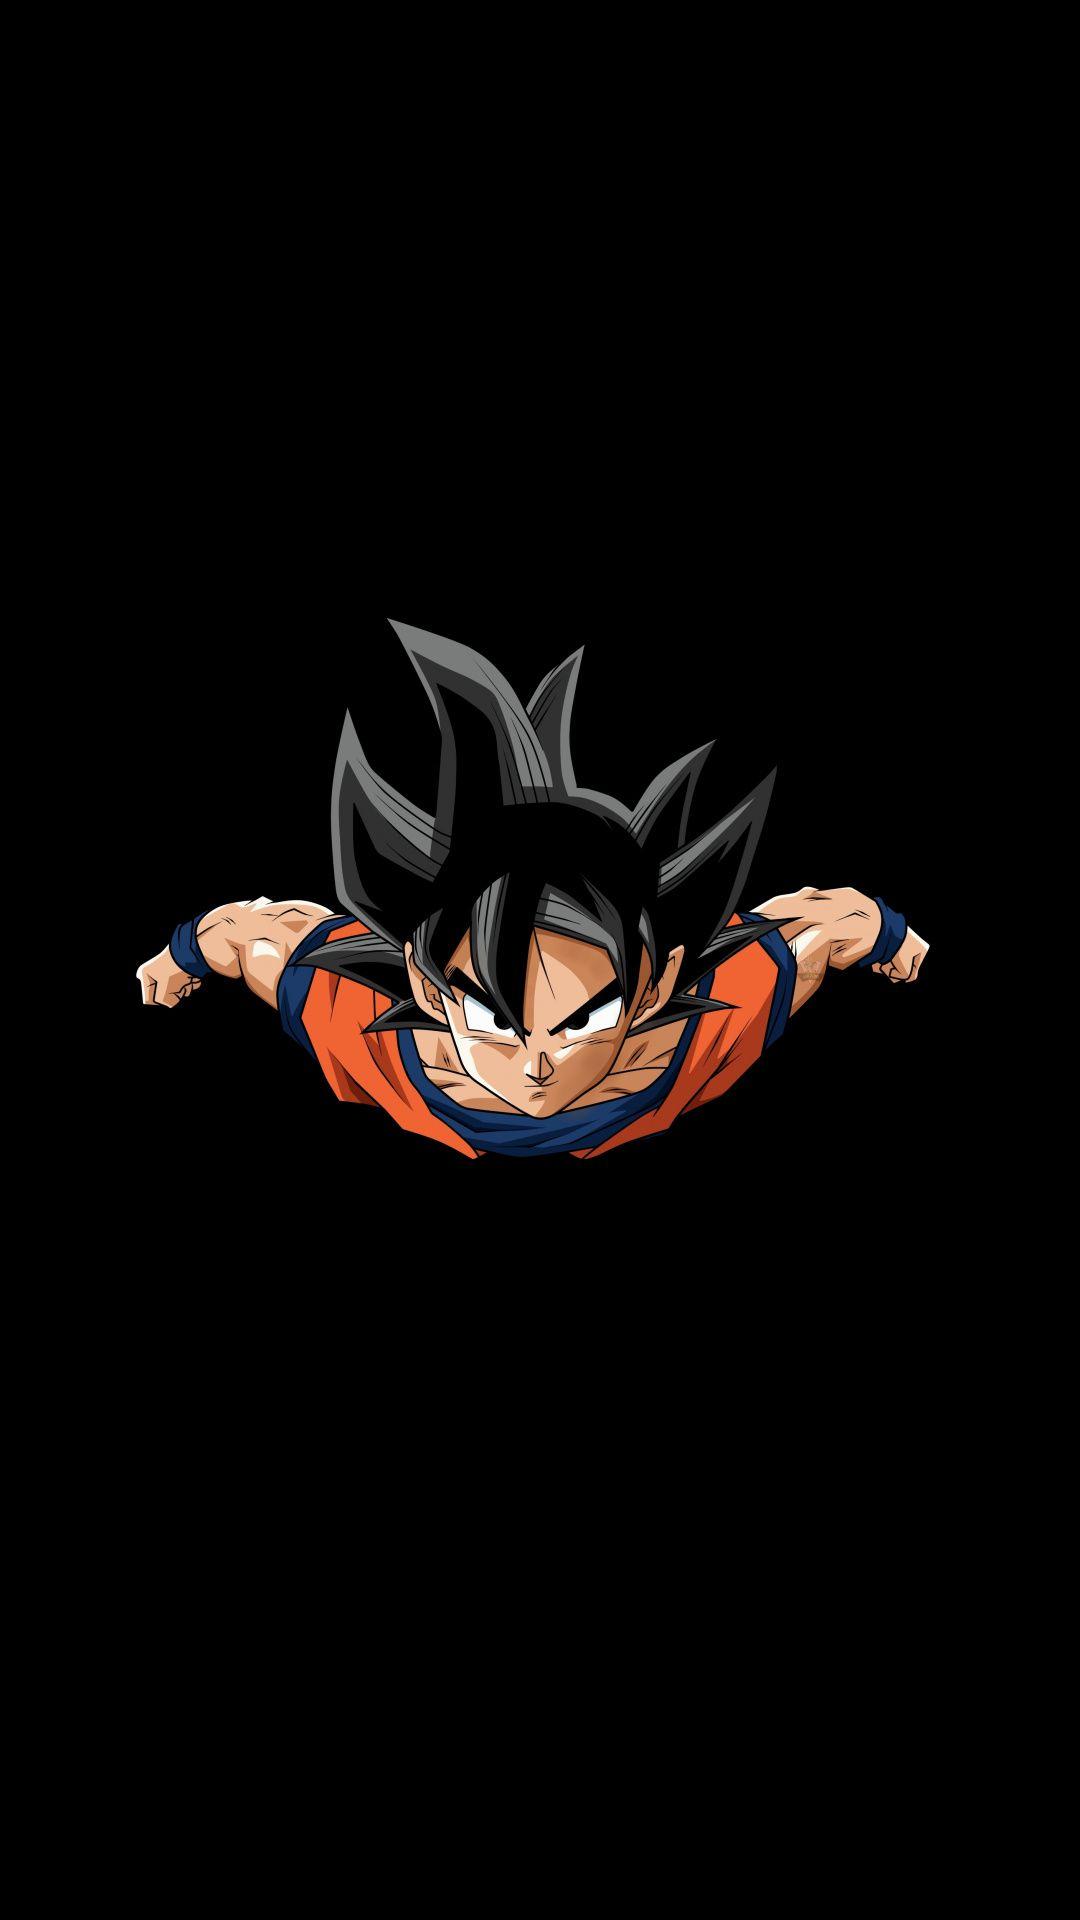 1080X1920 Goku Wallpapers - Top Free 1080X1920 Goku Backgrounds ...